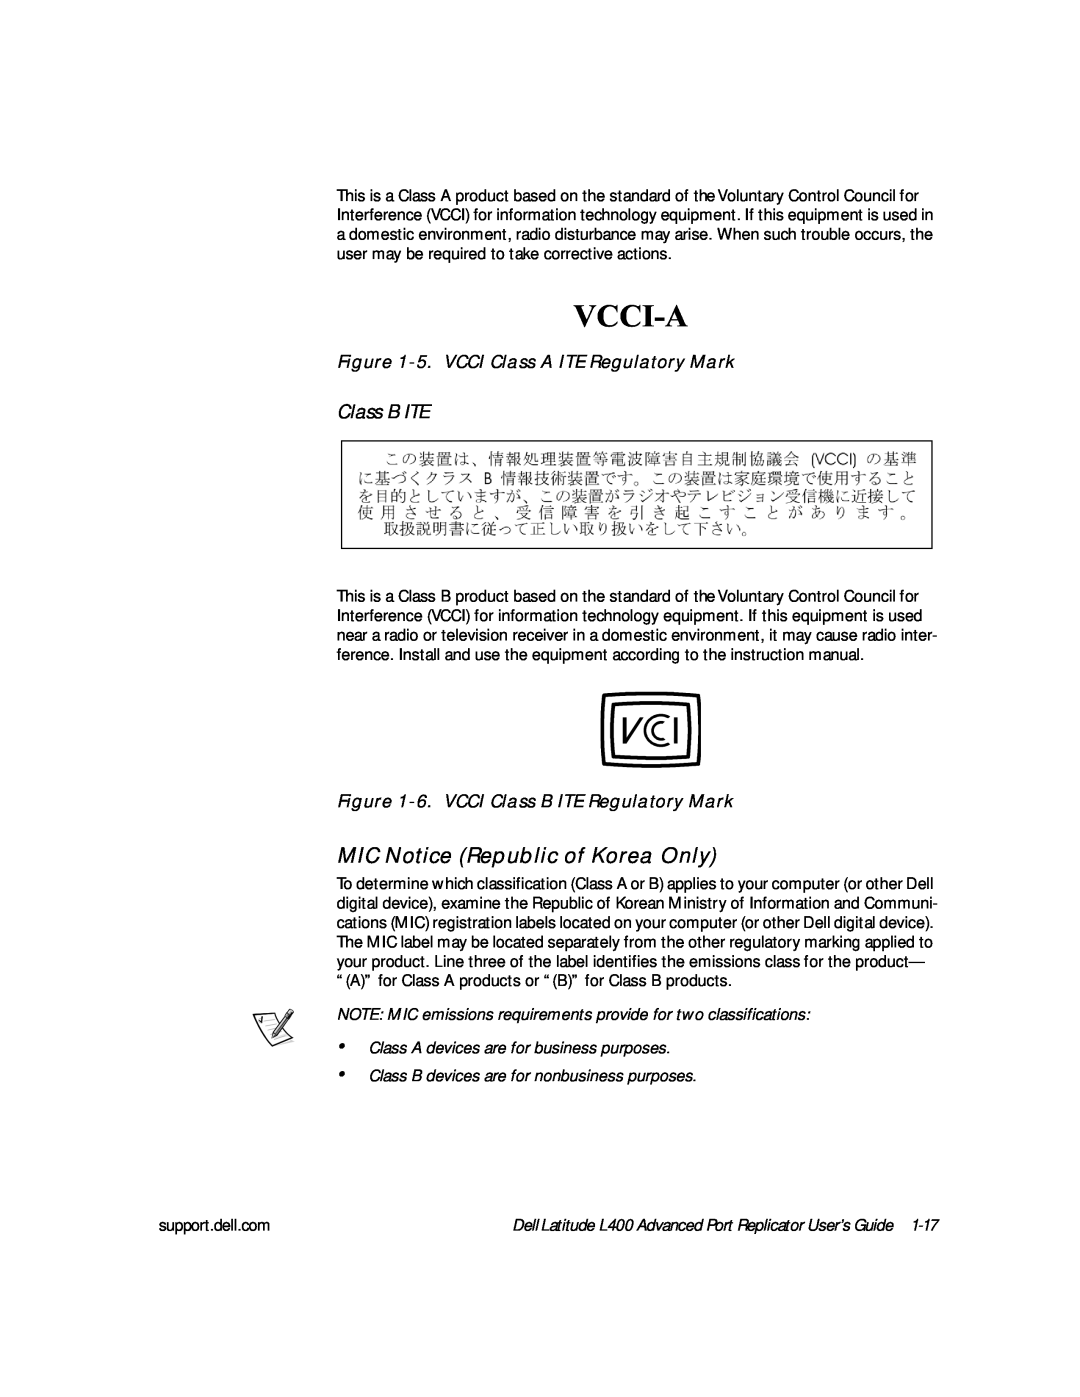 Dell L400 manual MIC Notice Republic of Korea Only, Class B ITE, 5.VCCI Class A ITE Regulatory Mark, 9&&,$ 